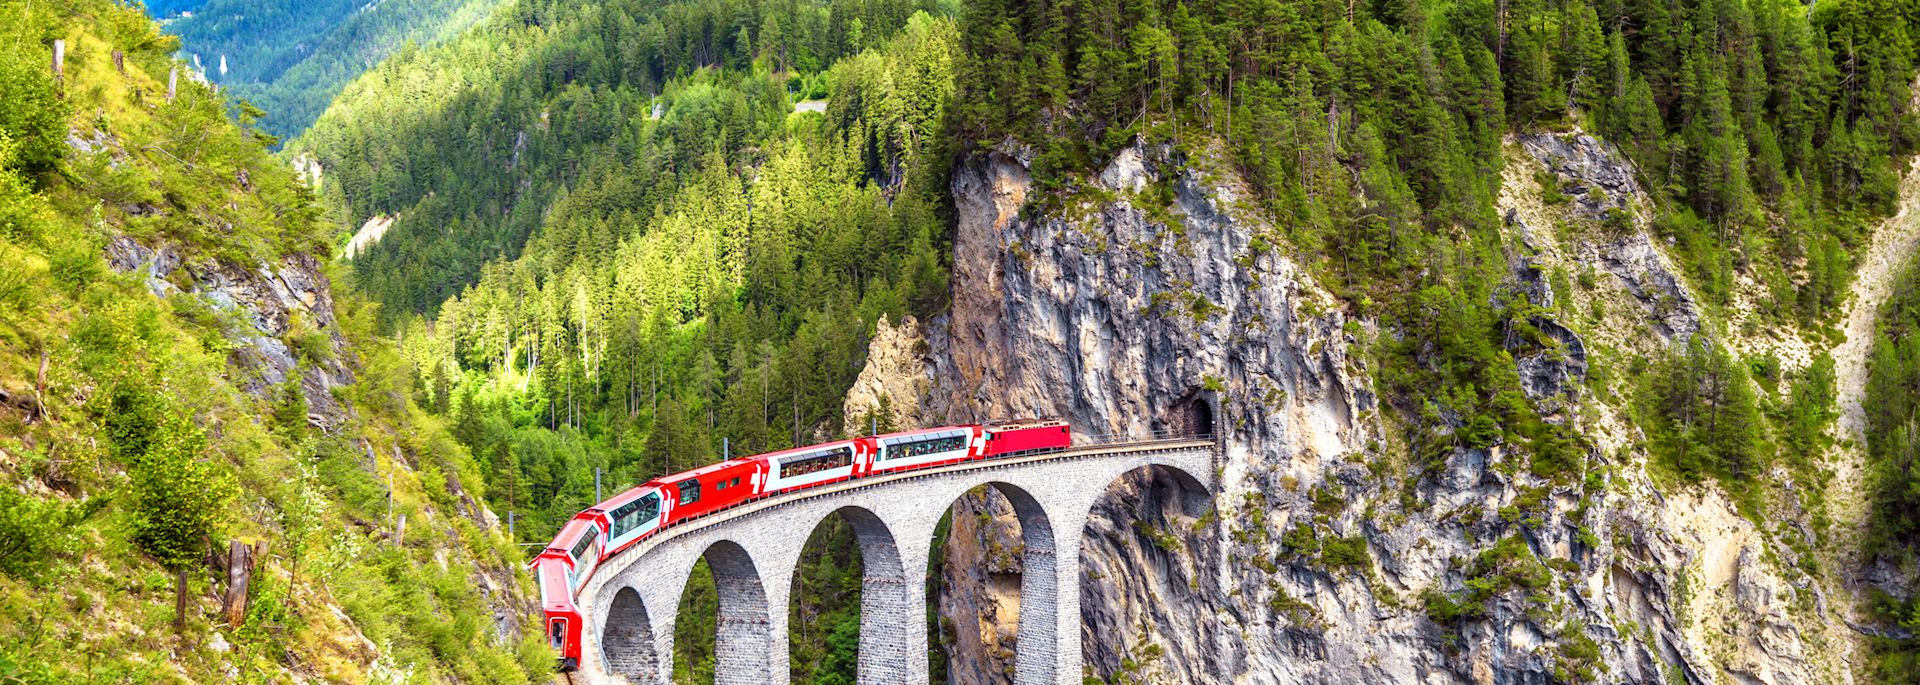 Glacier Express train